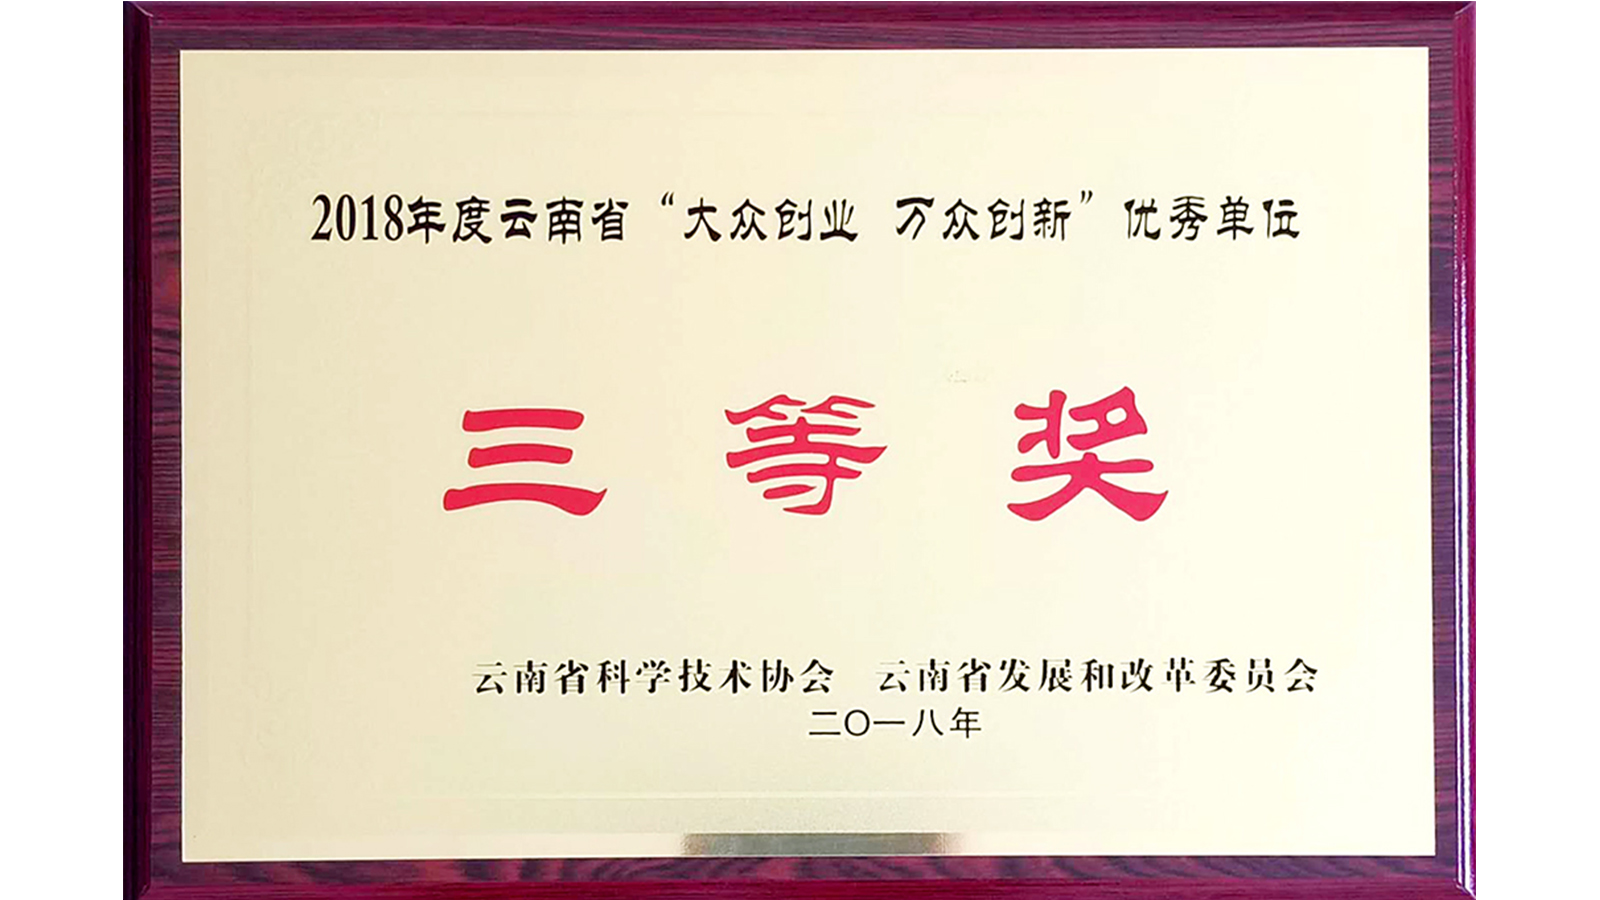 <b>2018年度云南省“大众创业，万众创新“优秀单位”三等奖“牌匾</b>